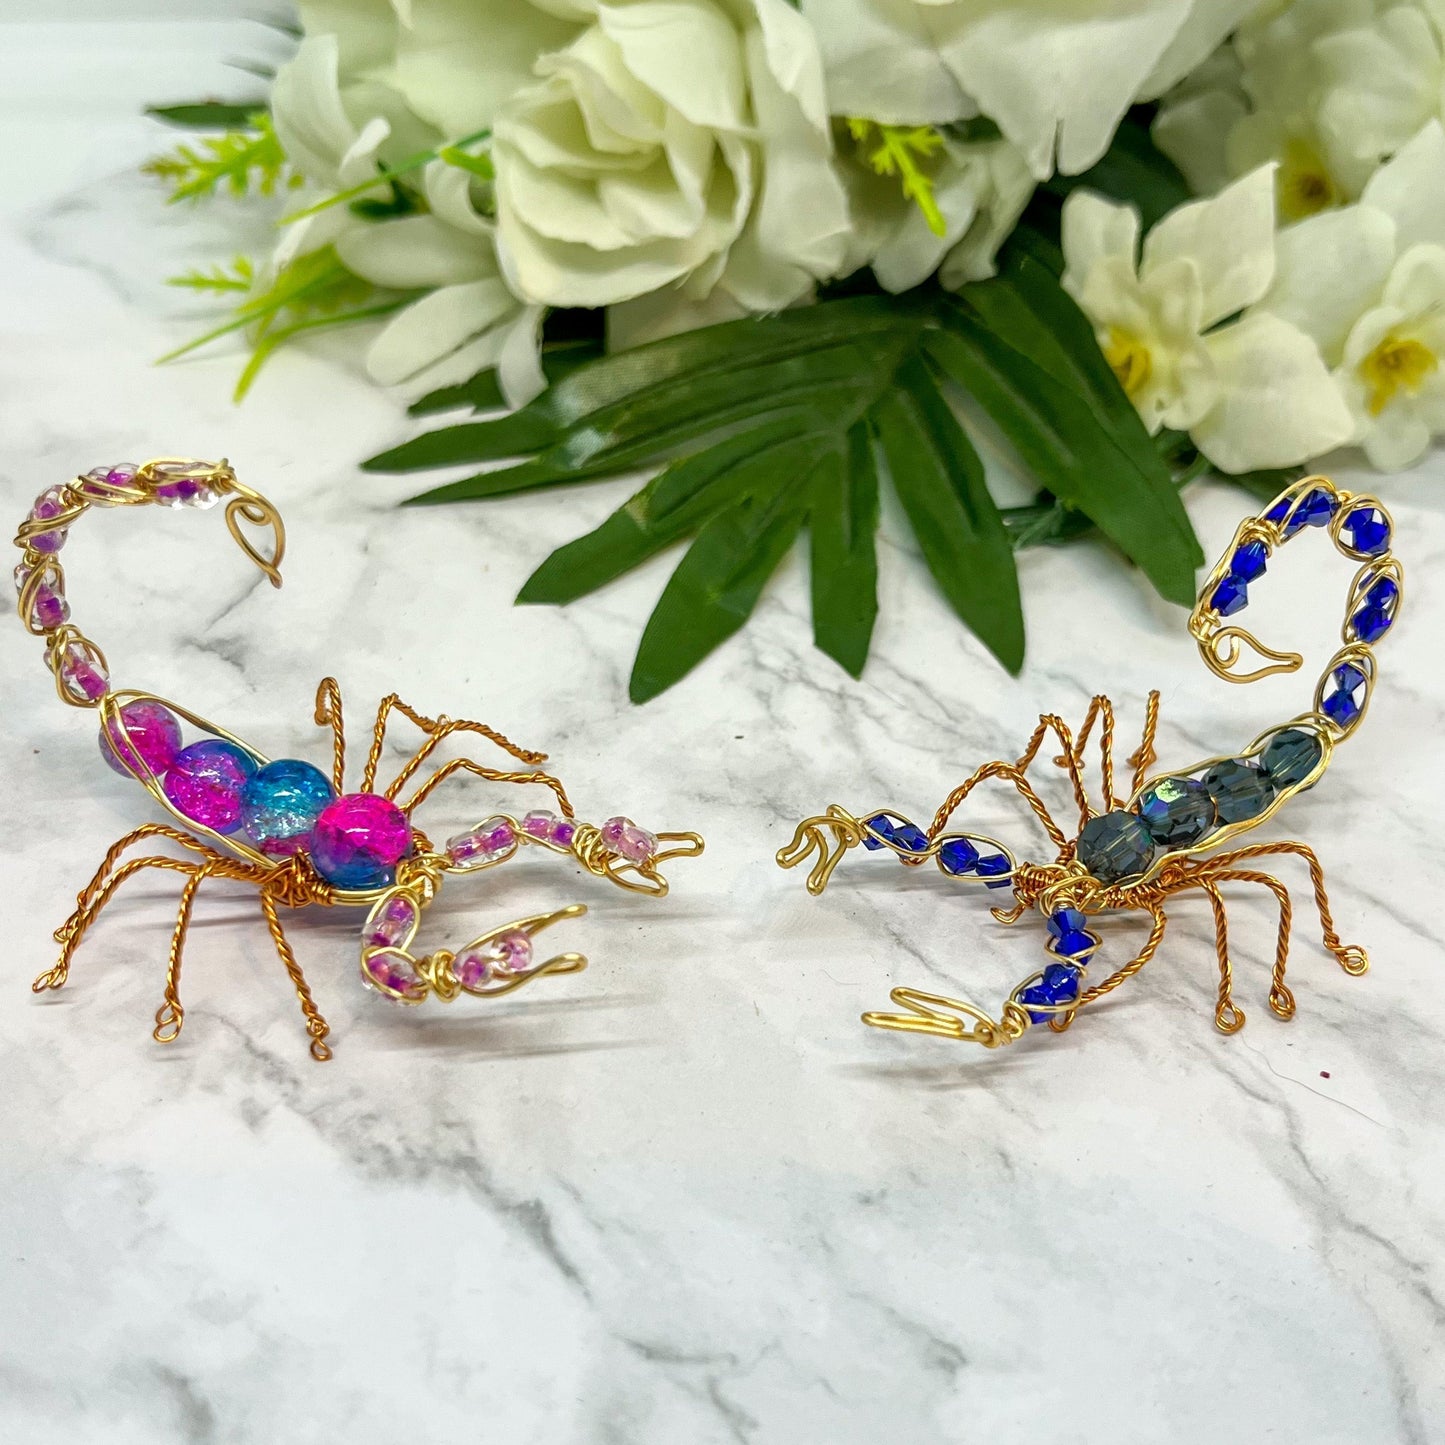 Scorpion Gift Idea | Gift For Scorpion Lover